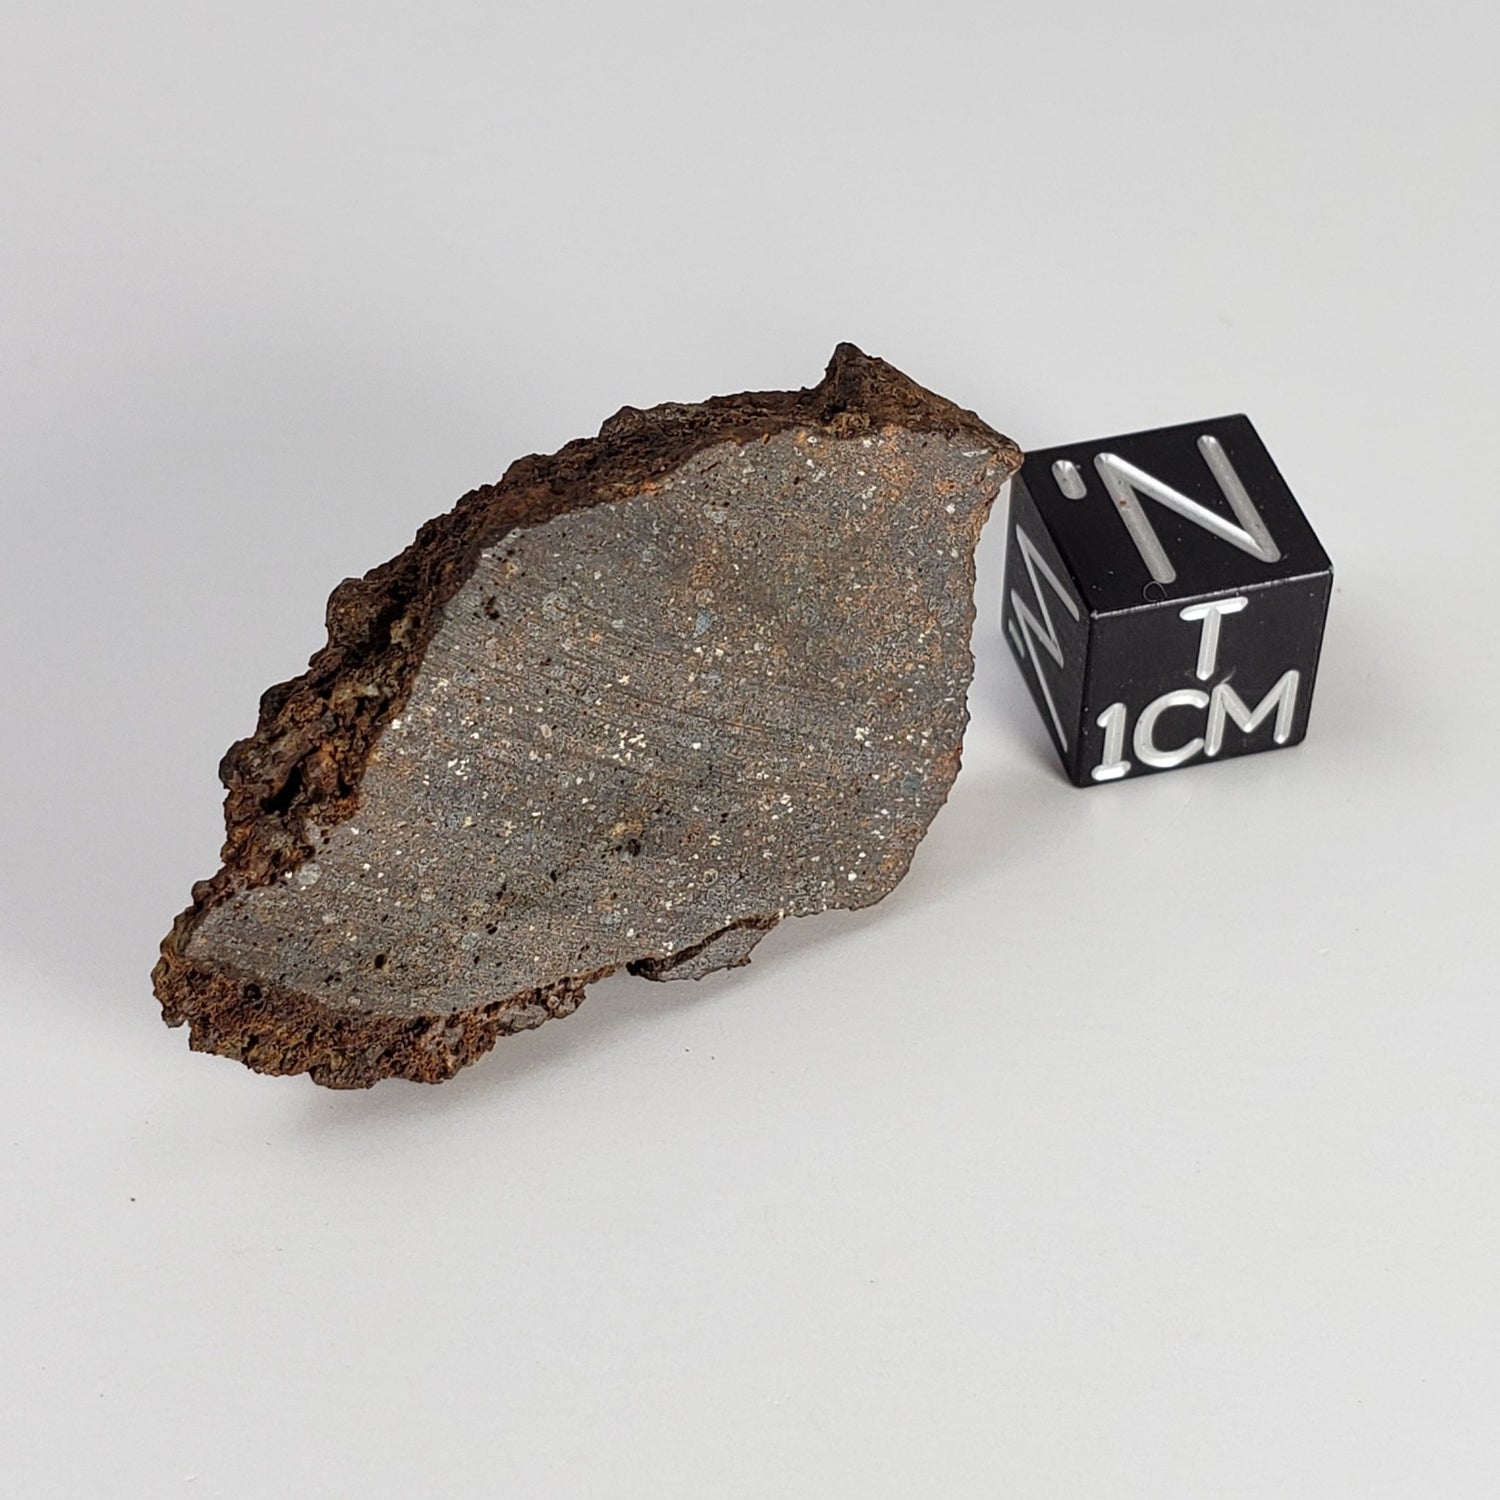 Korra Korrabes Meteorite | 11.1 Gr | Slice | H3 | Gibeon Strewnfield | Namaland, Namibia